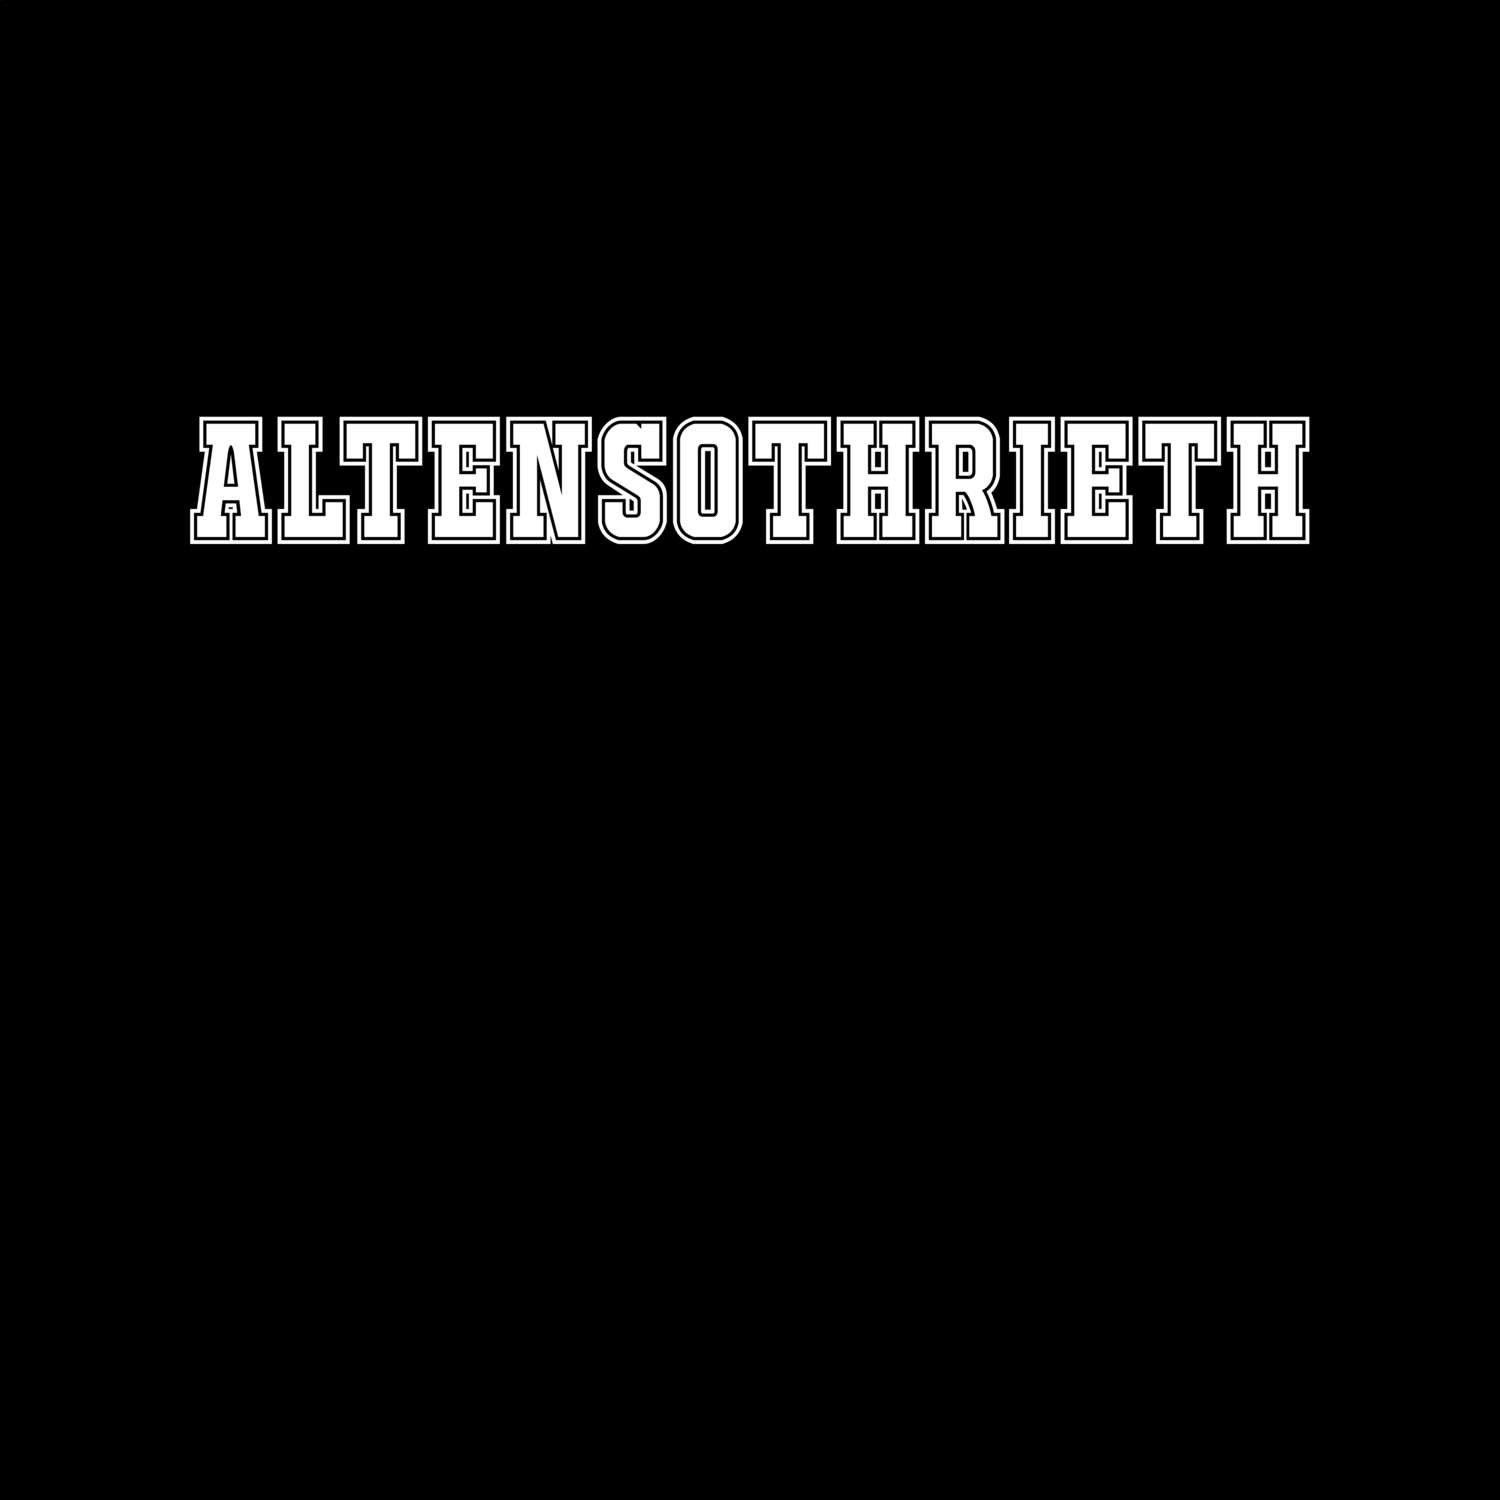 Altensothrieth T-Shirt »Classic«